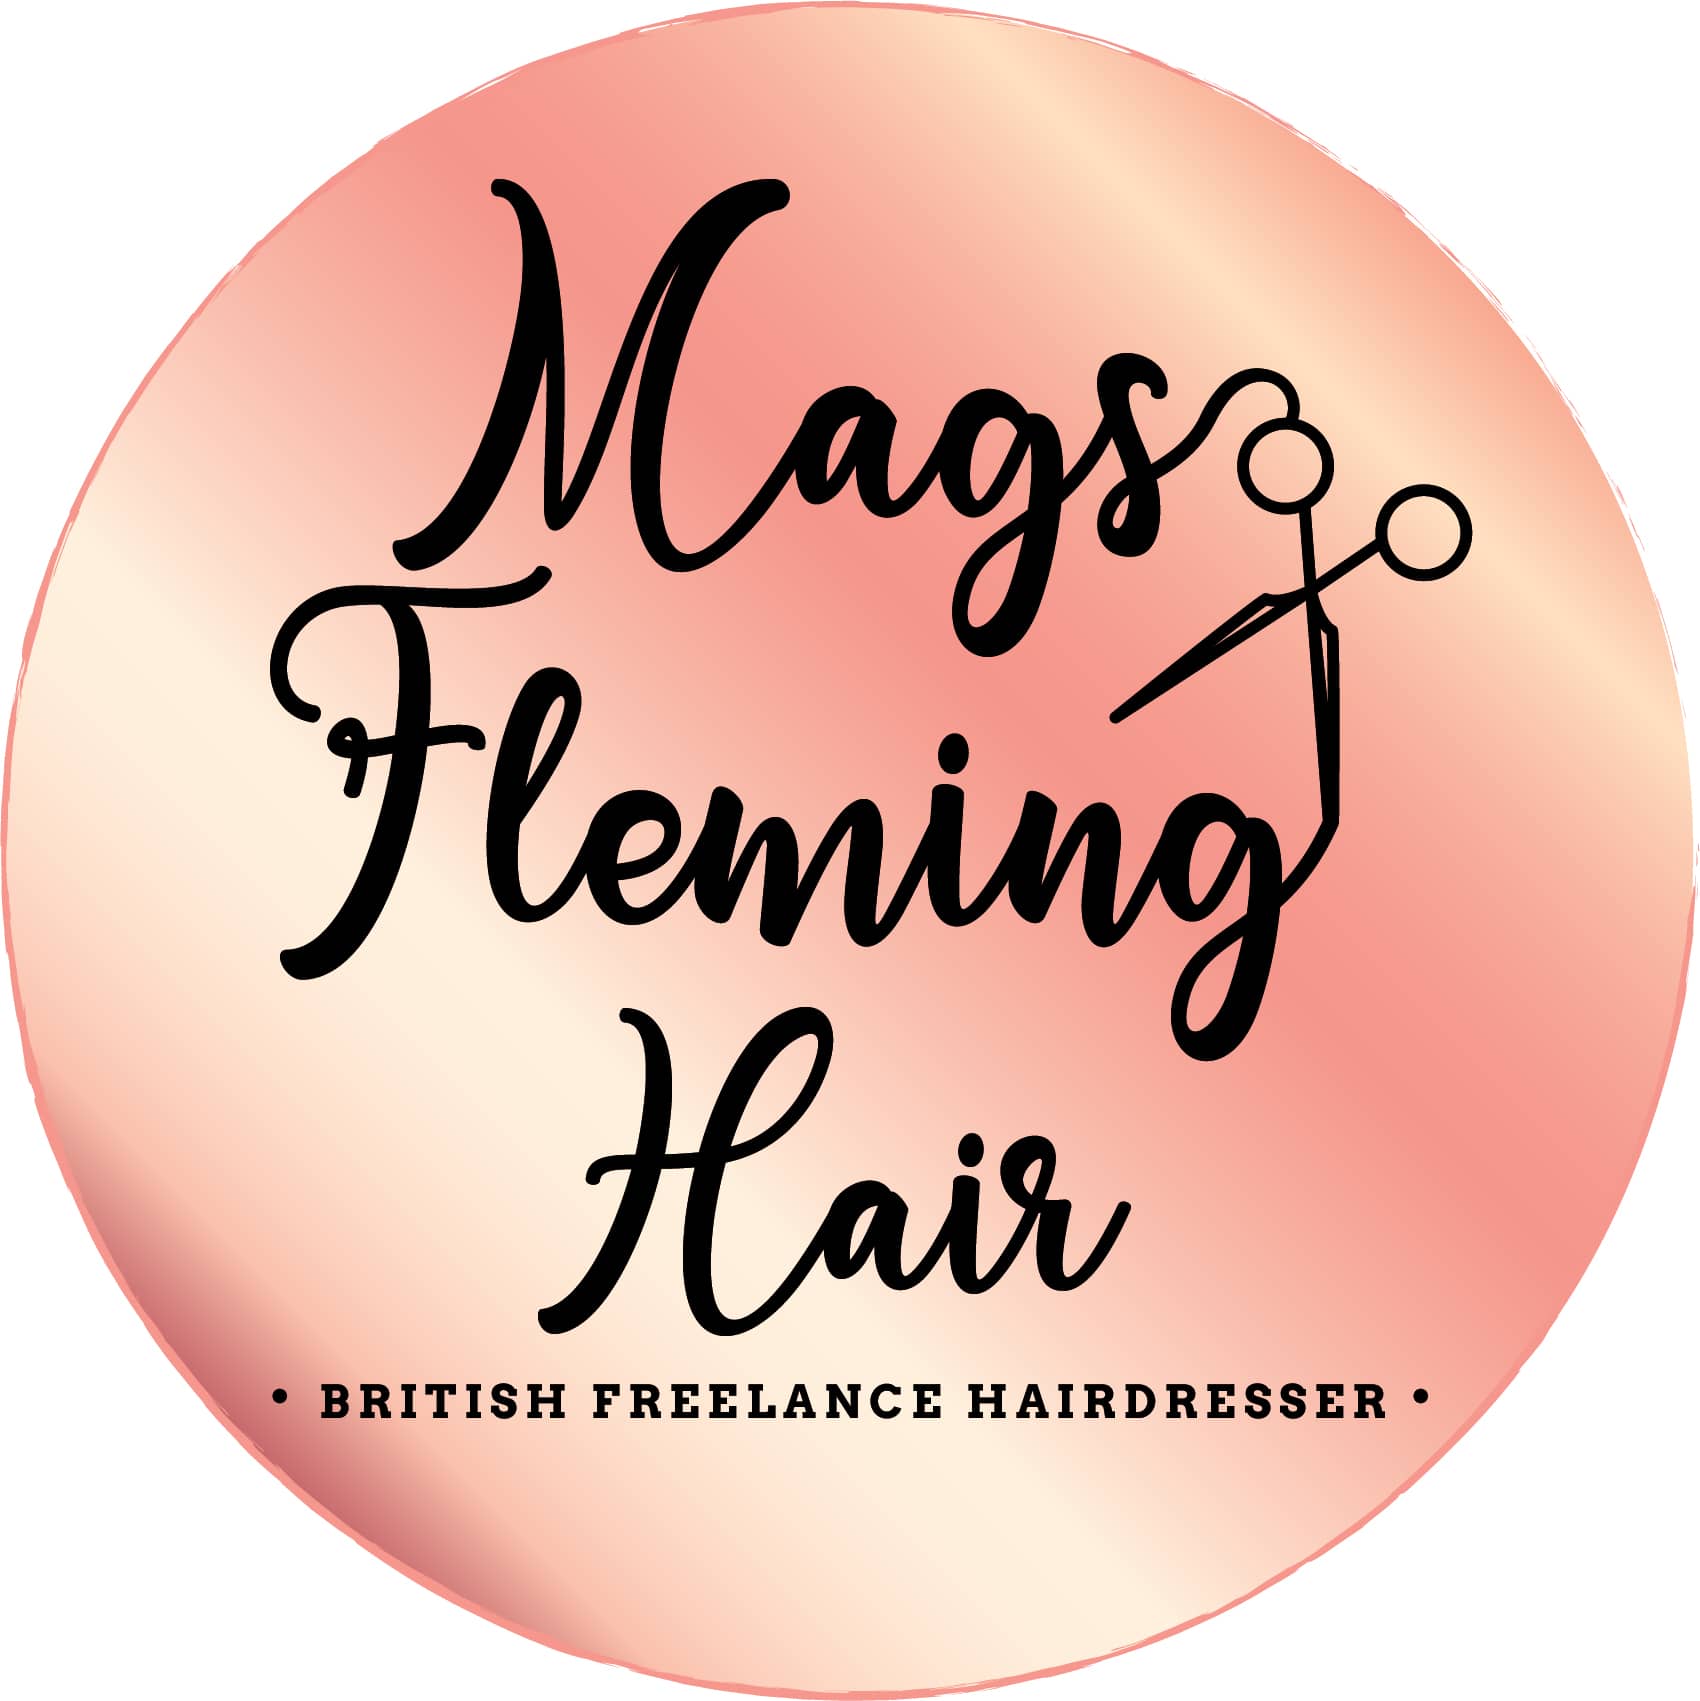 Mags Flemming Hair logo